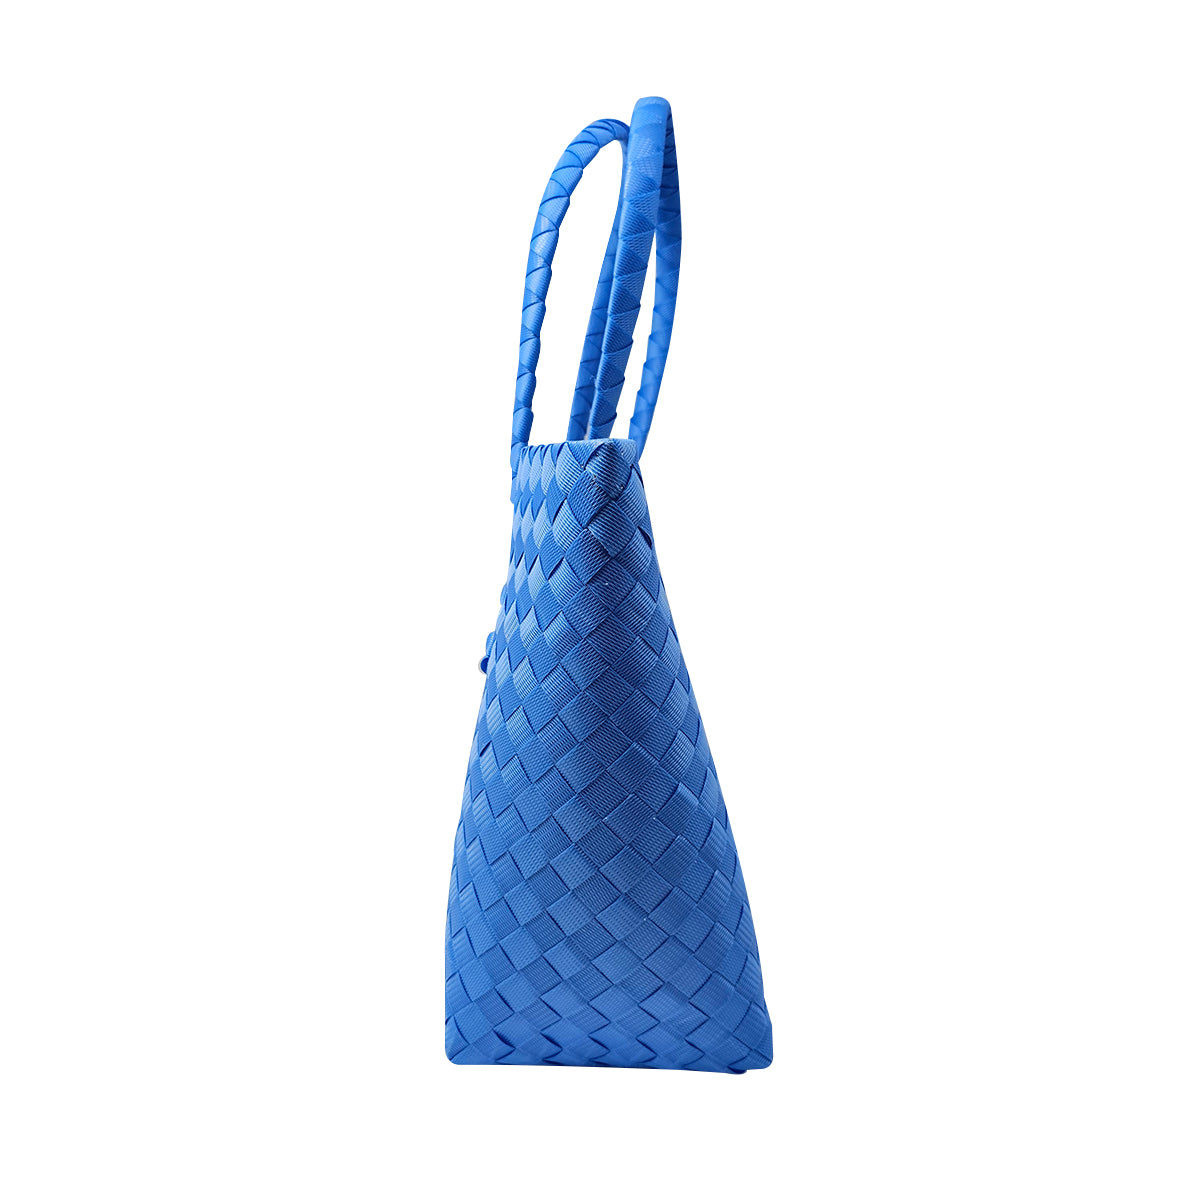 Misenka Handicrafts Philippine Bayong Azure Blue Classic with Zipper Bag - SALE 50% OFF